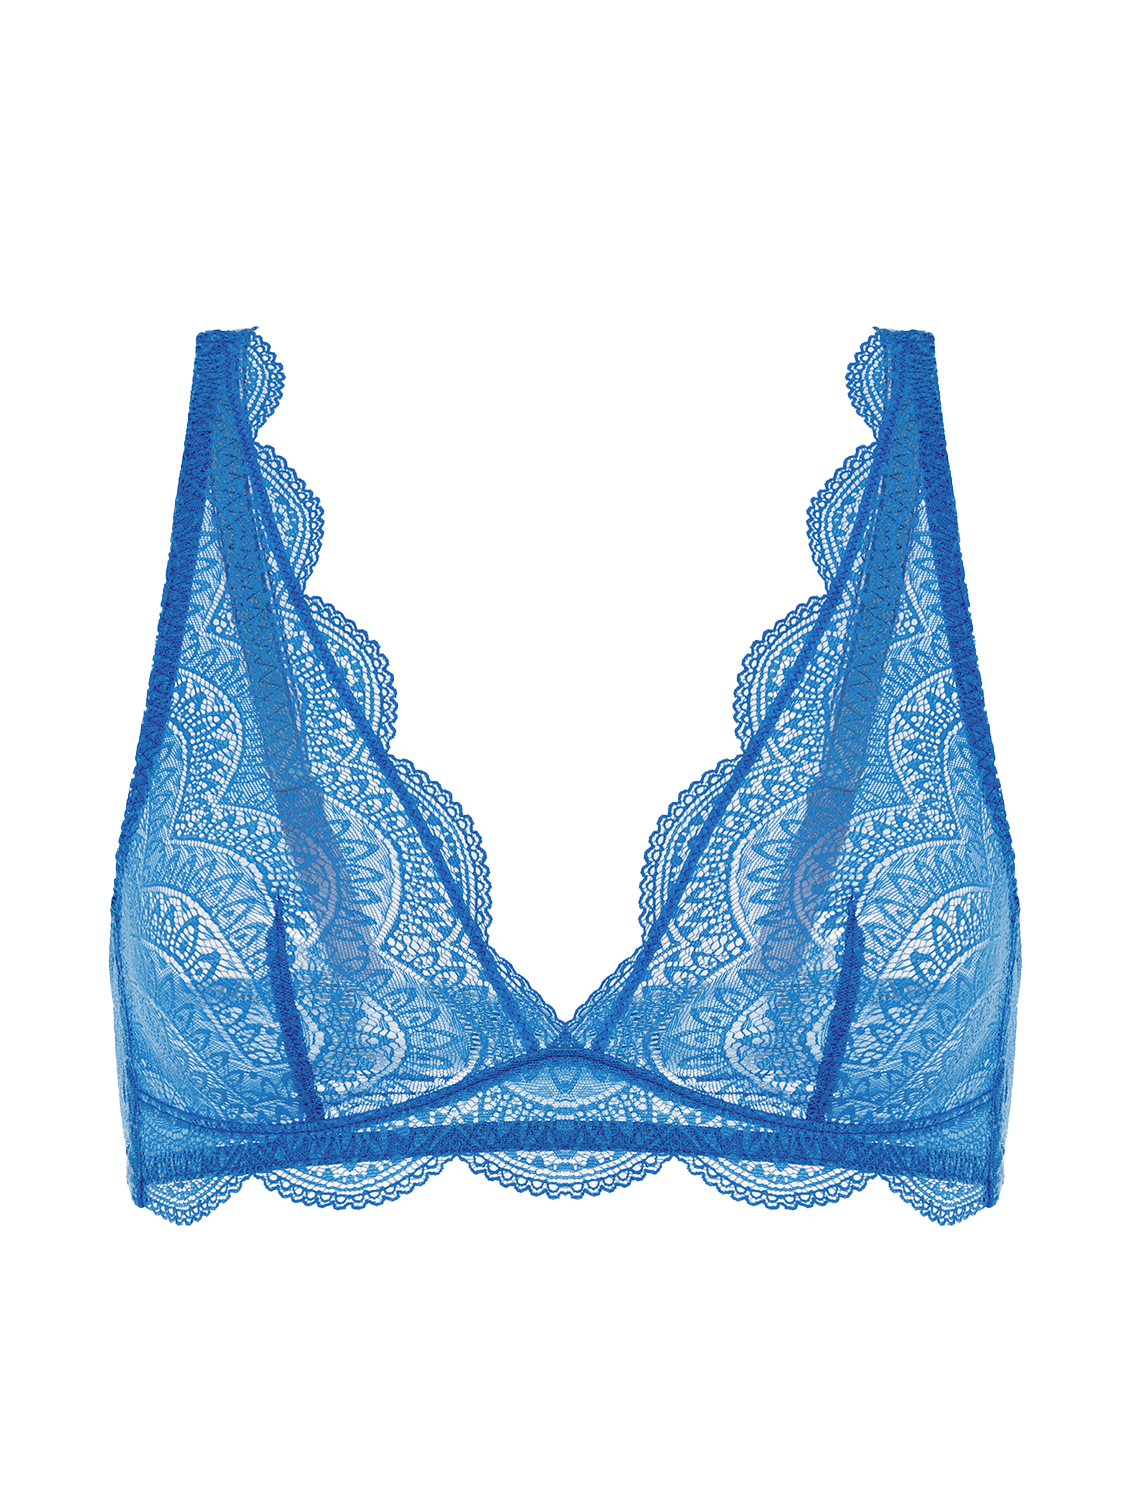 njshnmn Women's Lace Padded Bralette Bra Top Full-Freedom Wireless Comfort  Bras - Expandable Cup, Light Blue, XXL 